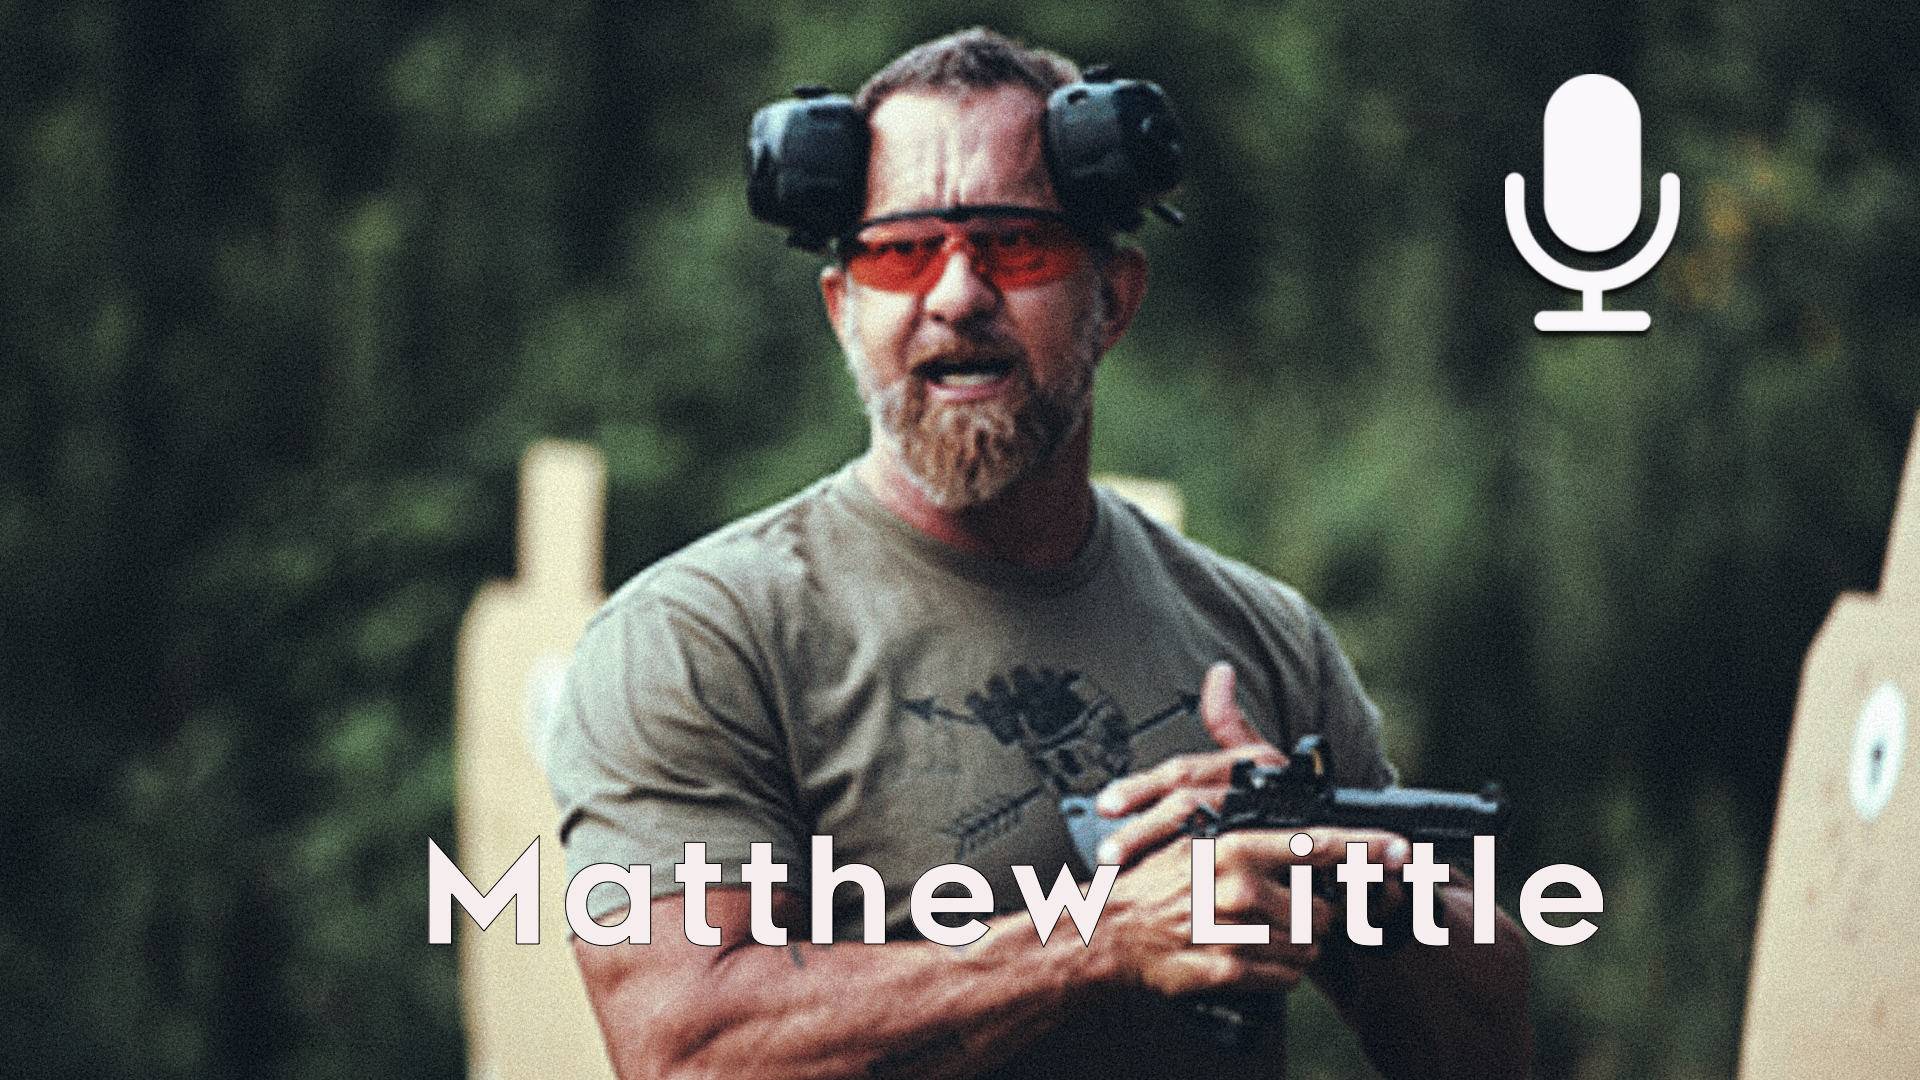 Matthew Little – The Way is in Training